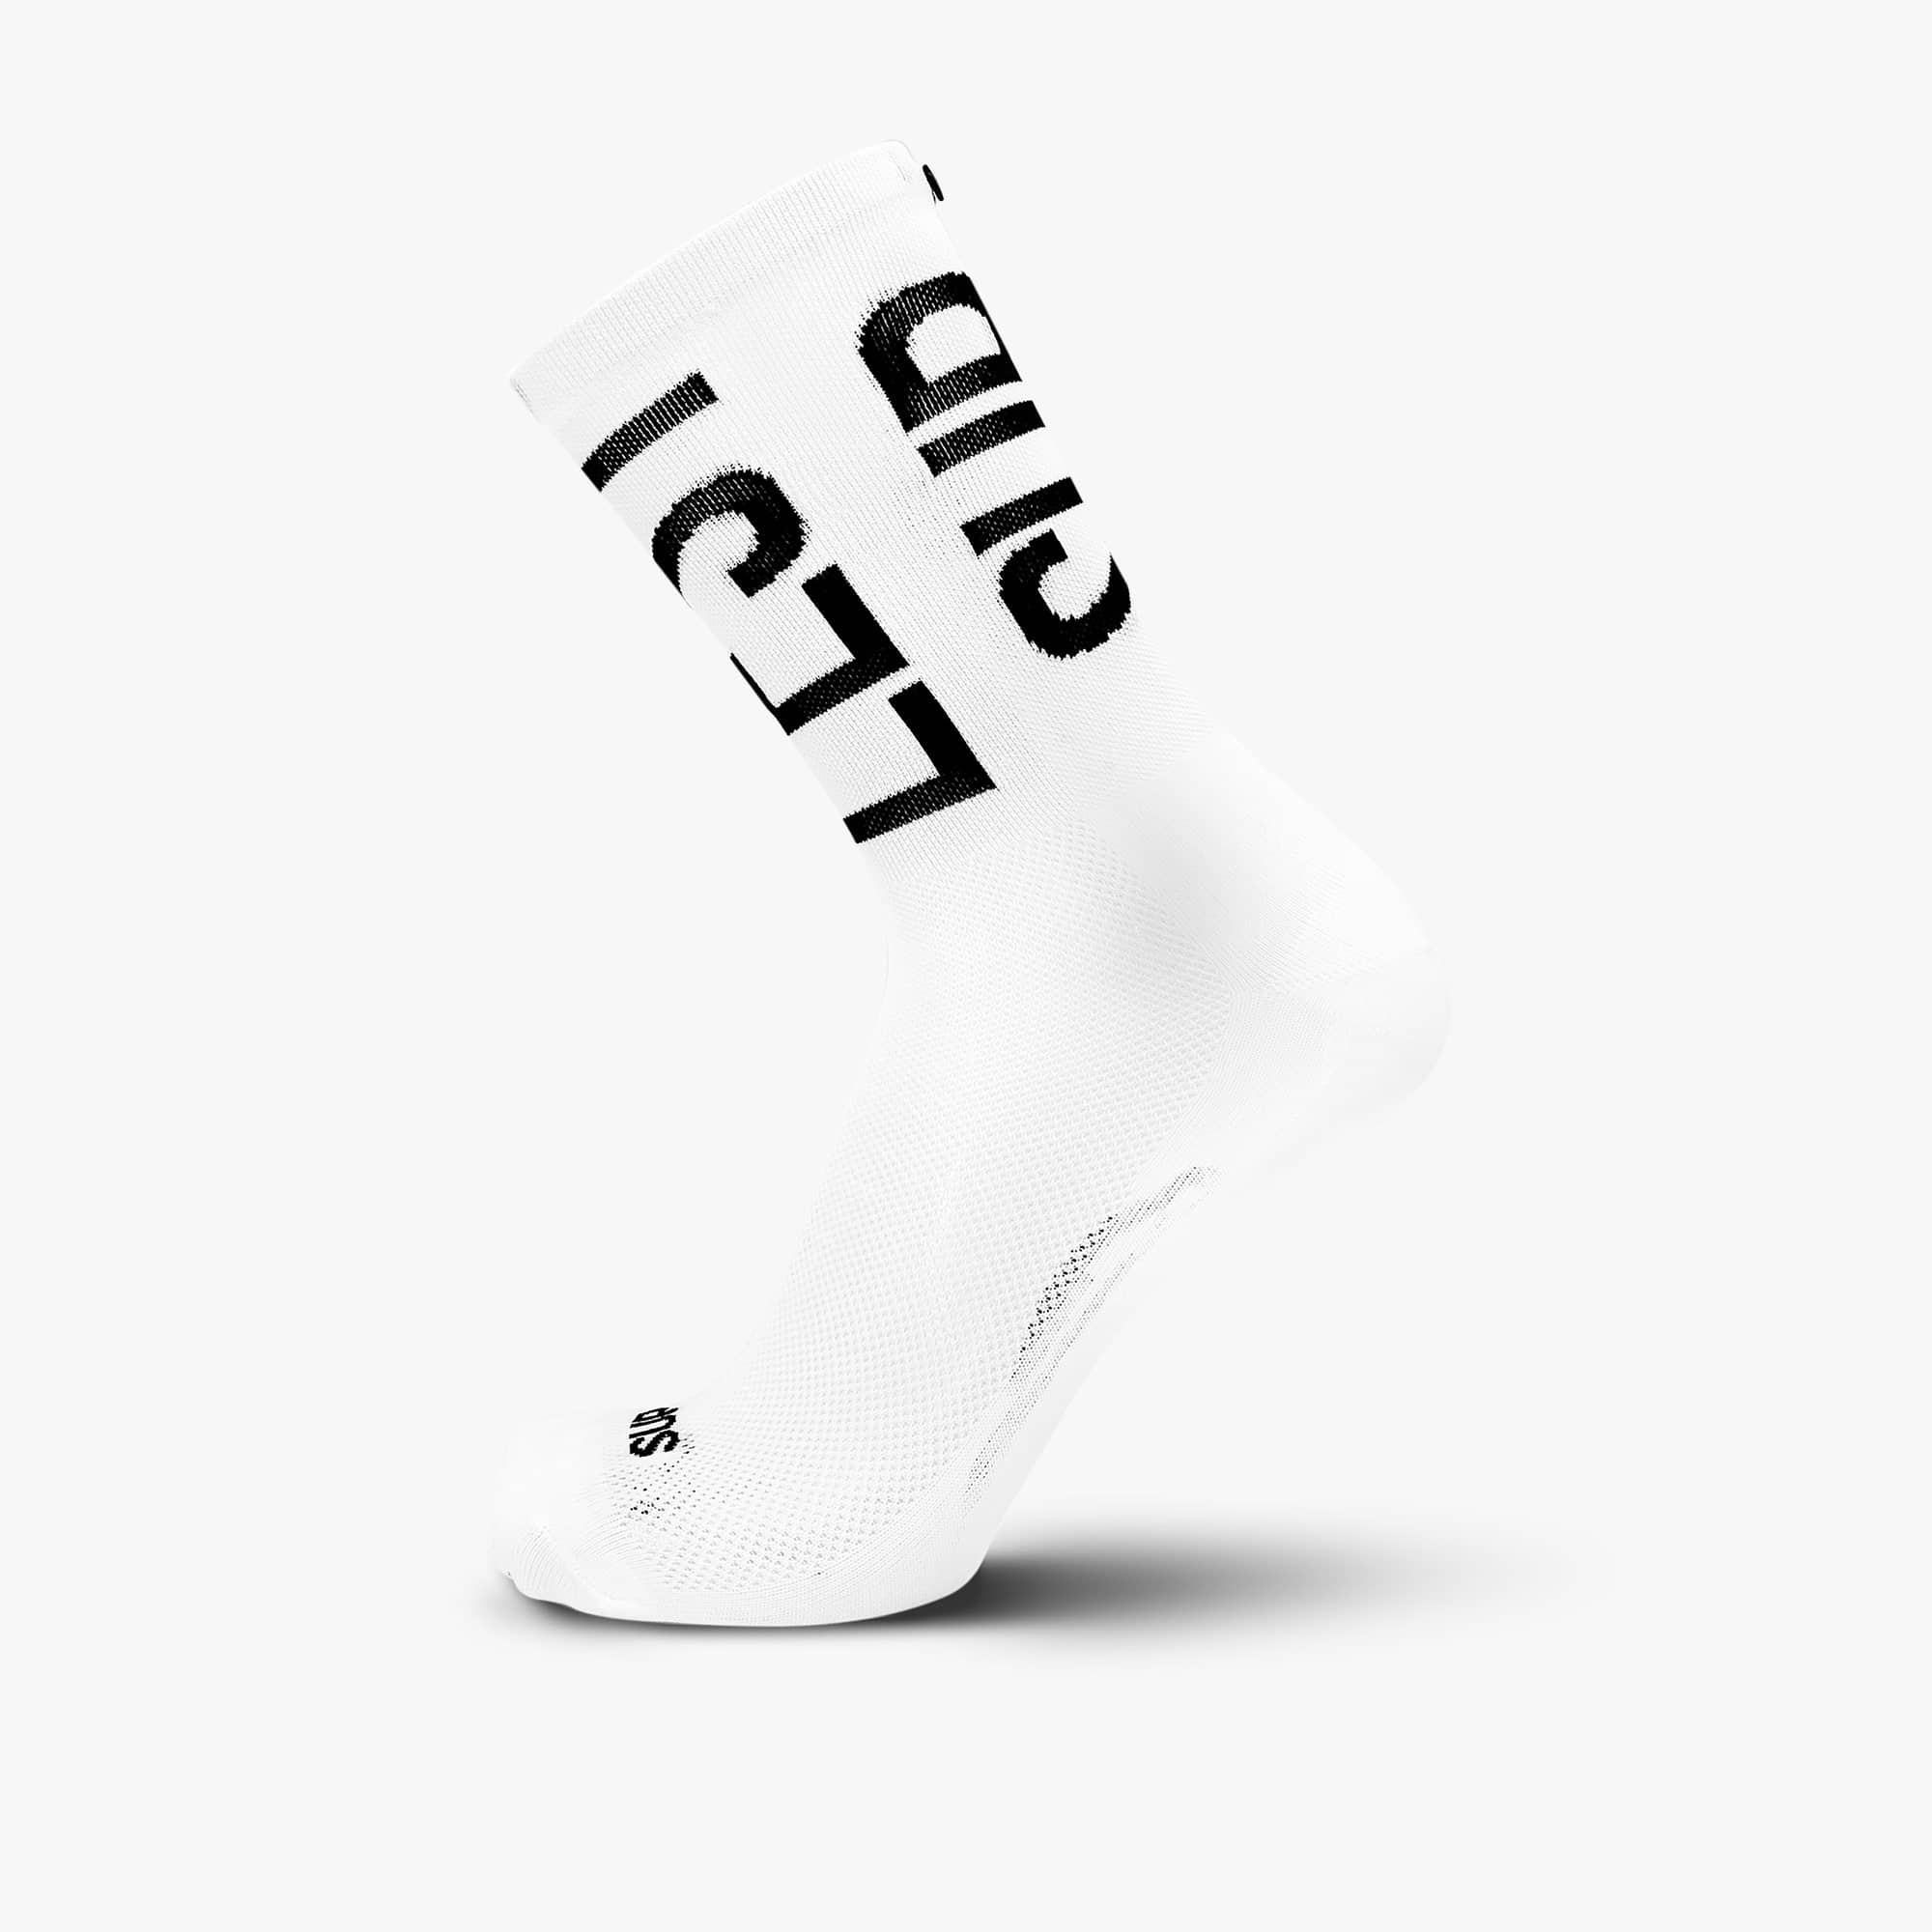 Supreme x Nike Crew Socks